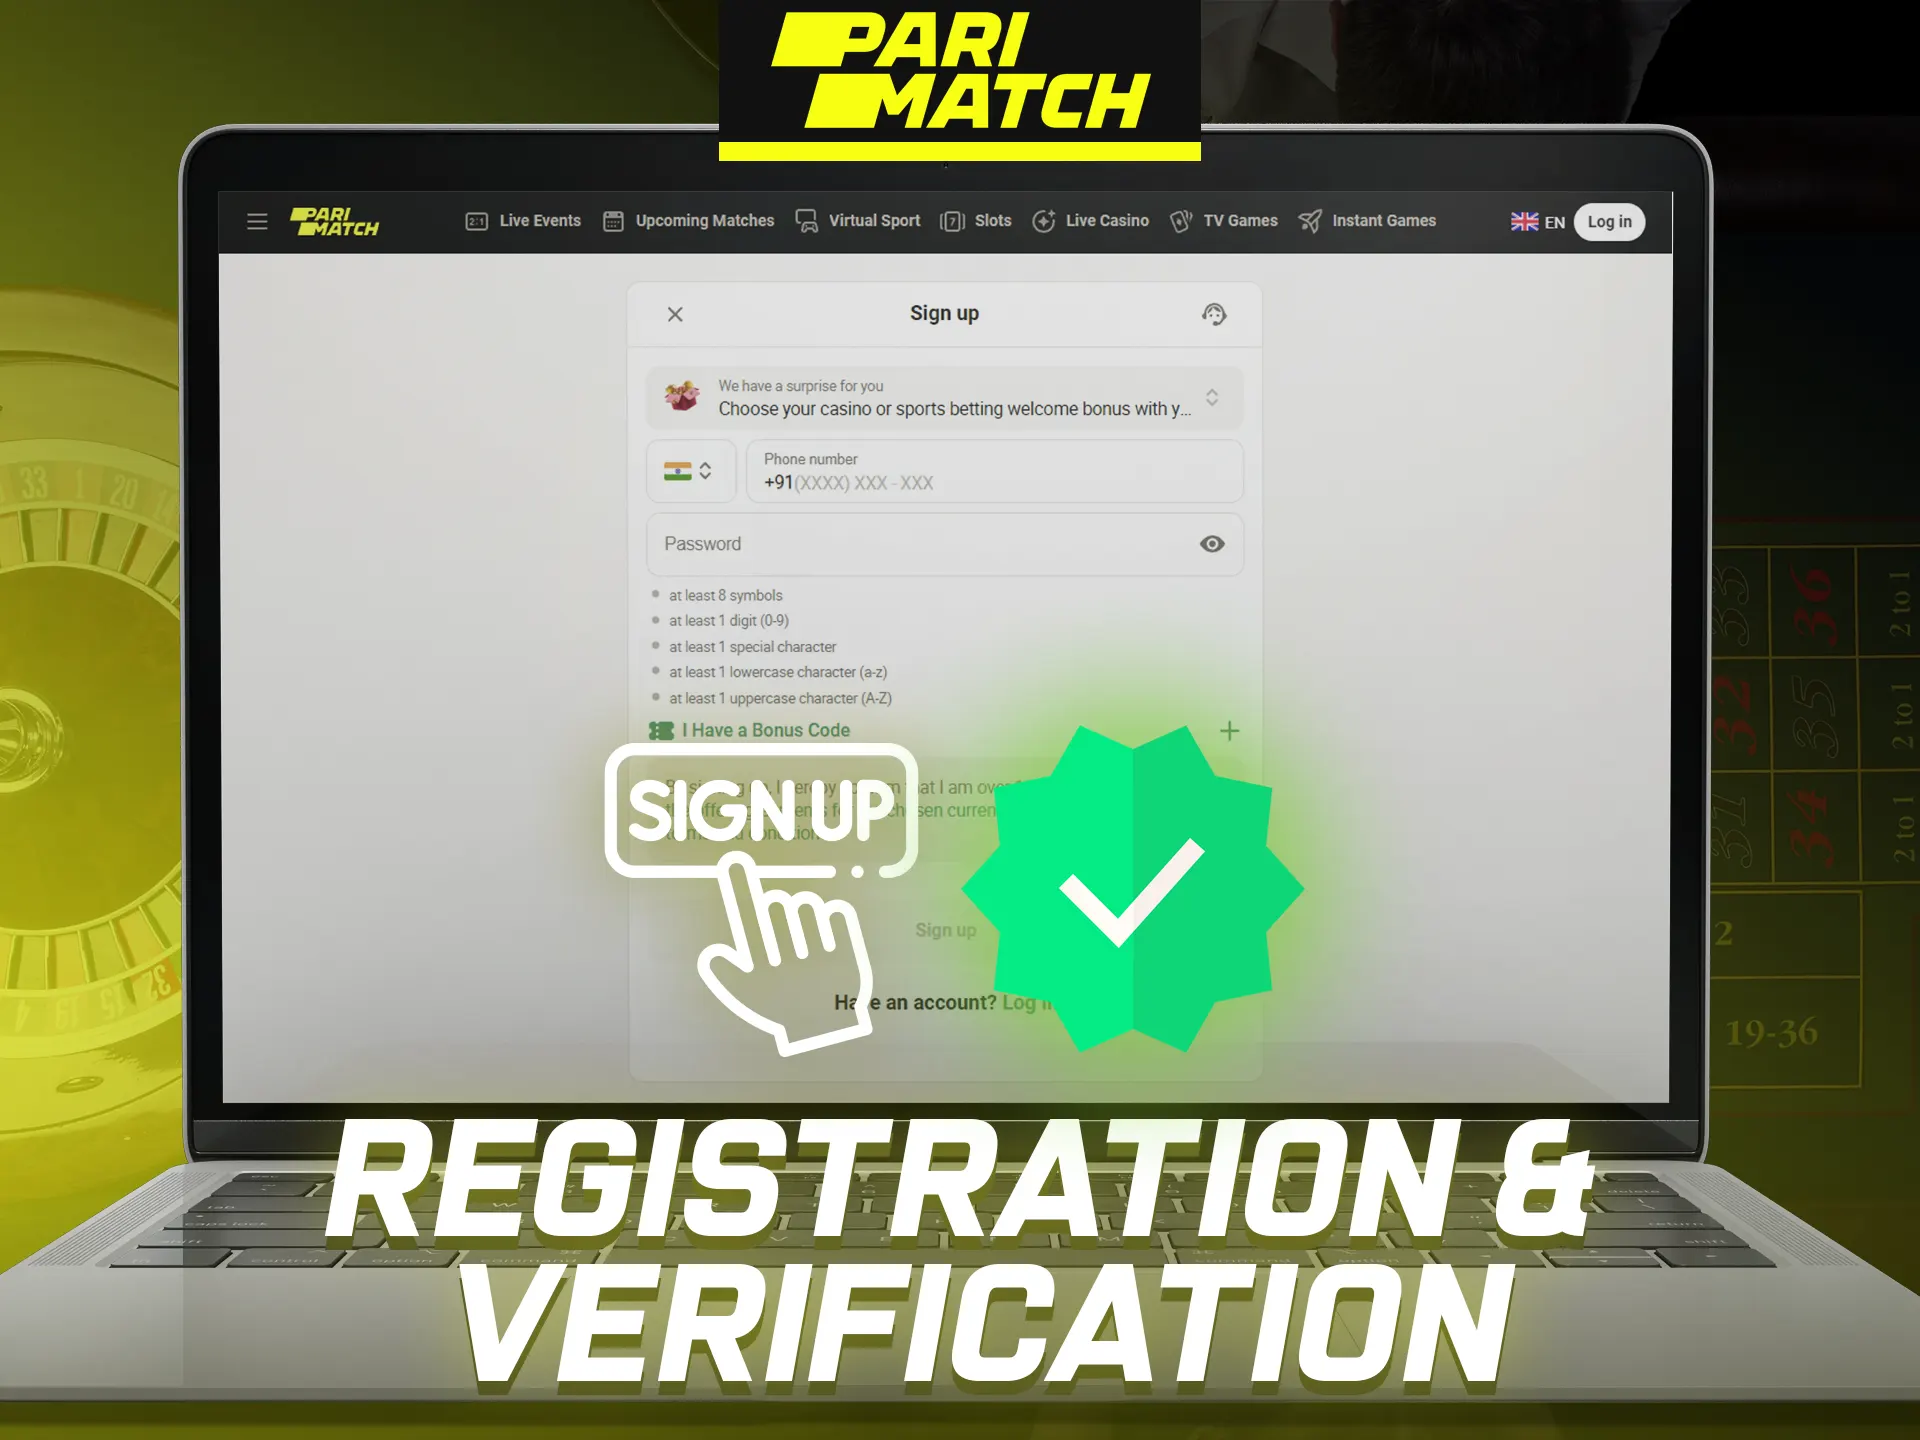 Register and verify your details.